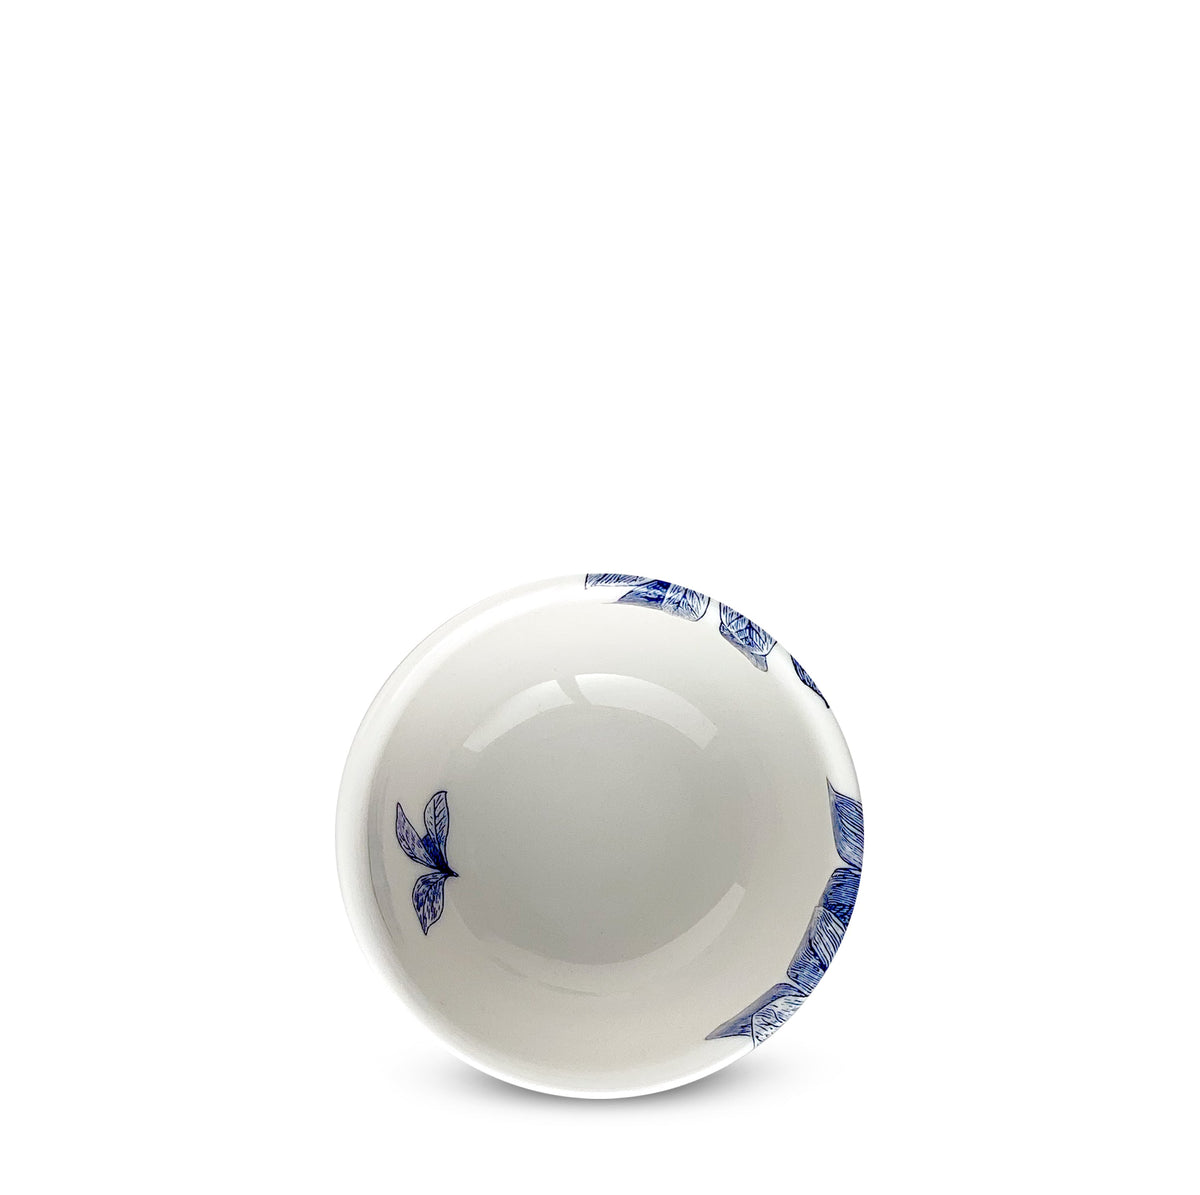 A vintage Caskata Artisanal Home Blue Arbor Snack Bowl on a white surface.